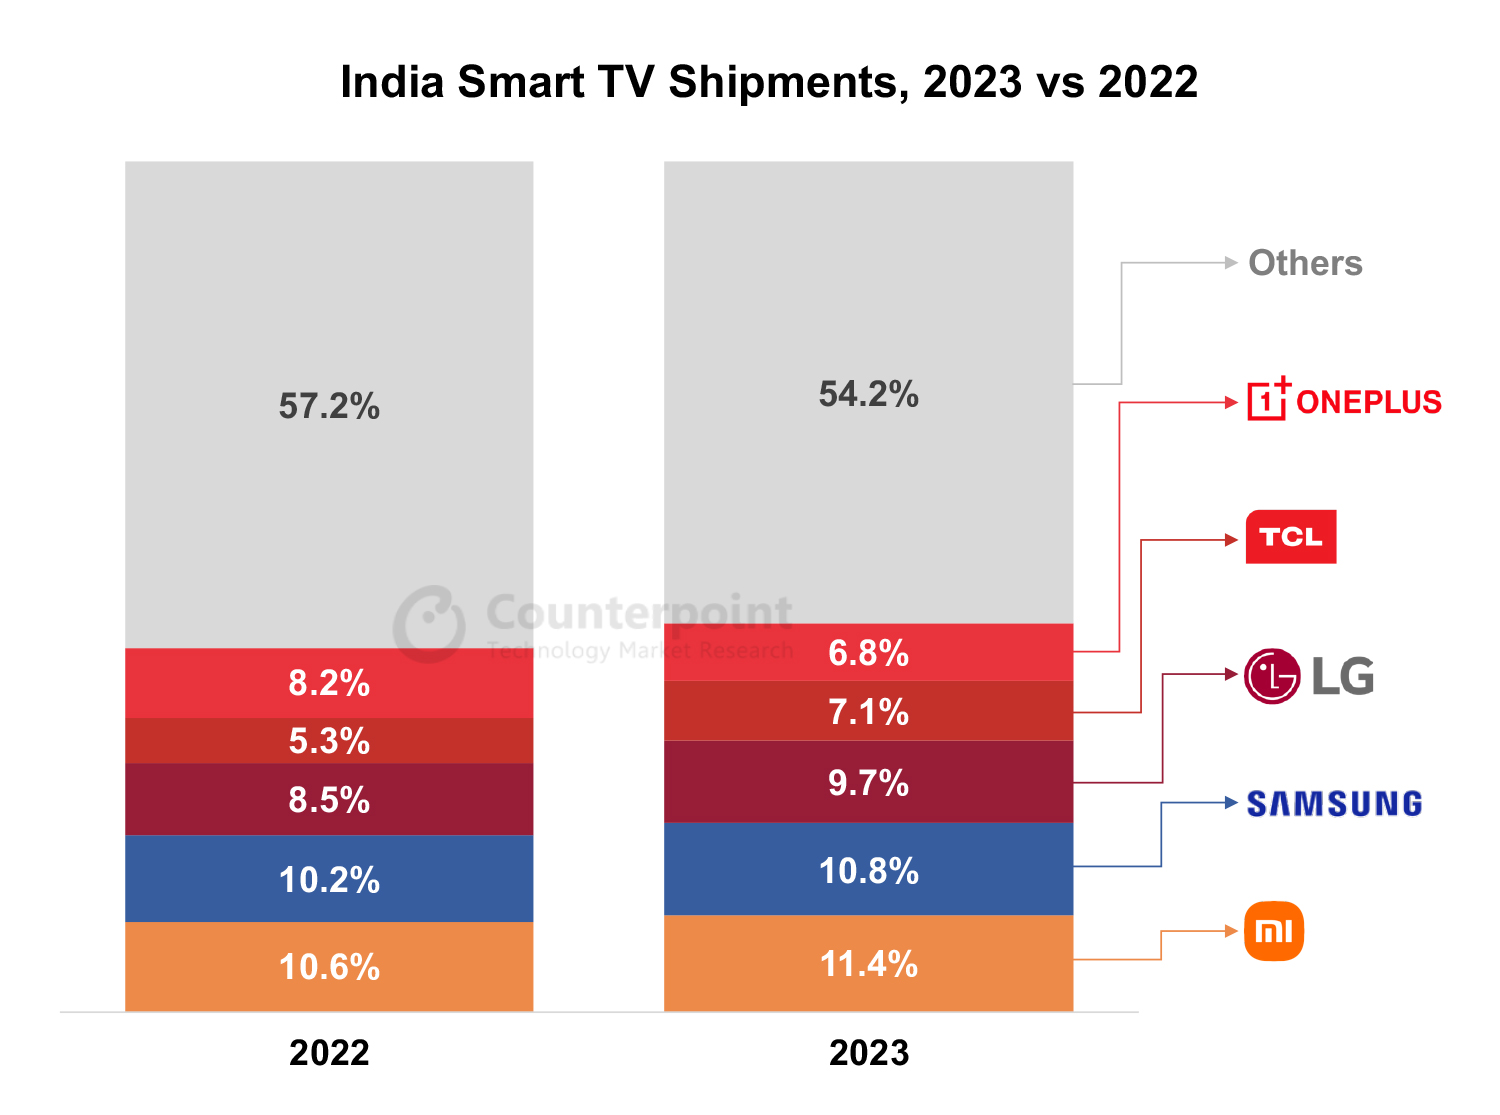 India Smart TV Shipments 2023 vs 2022